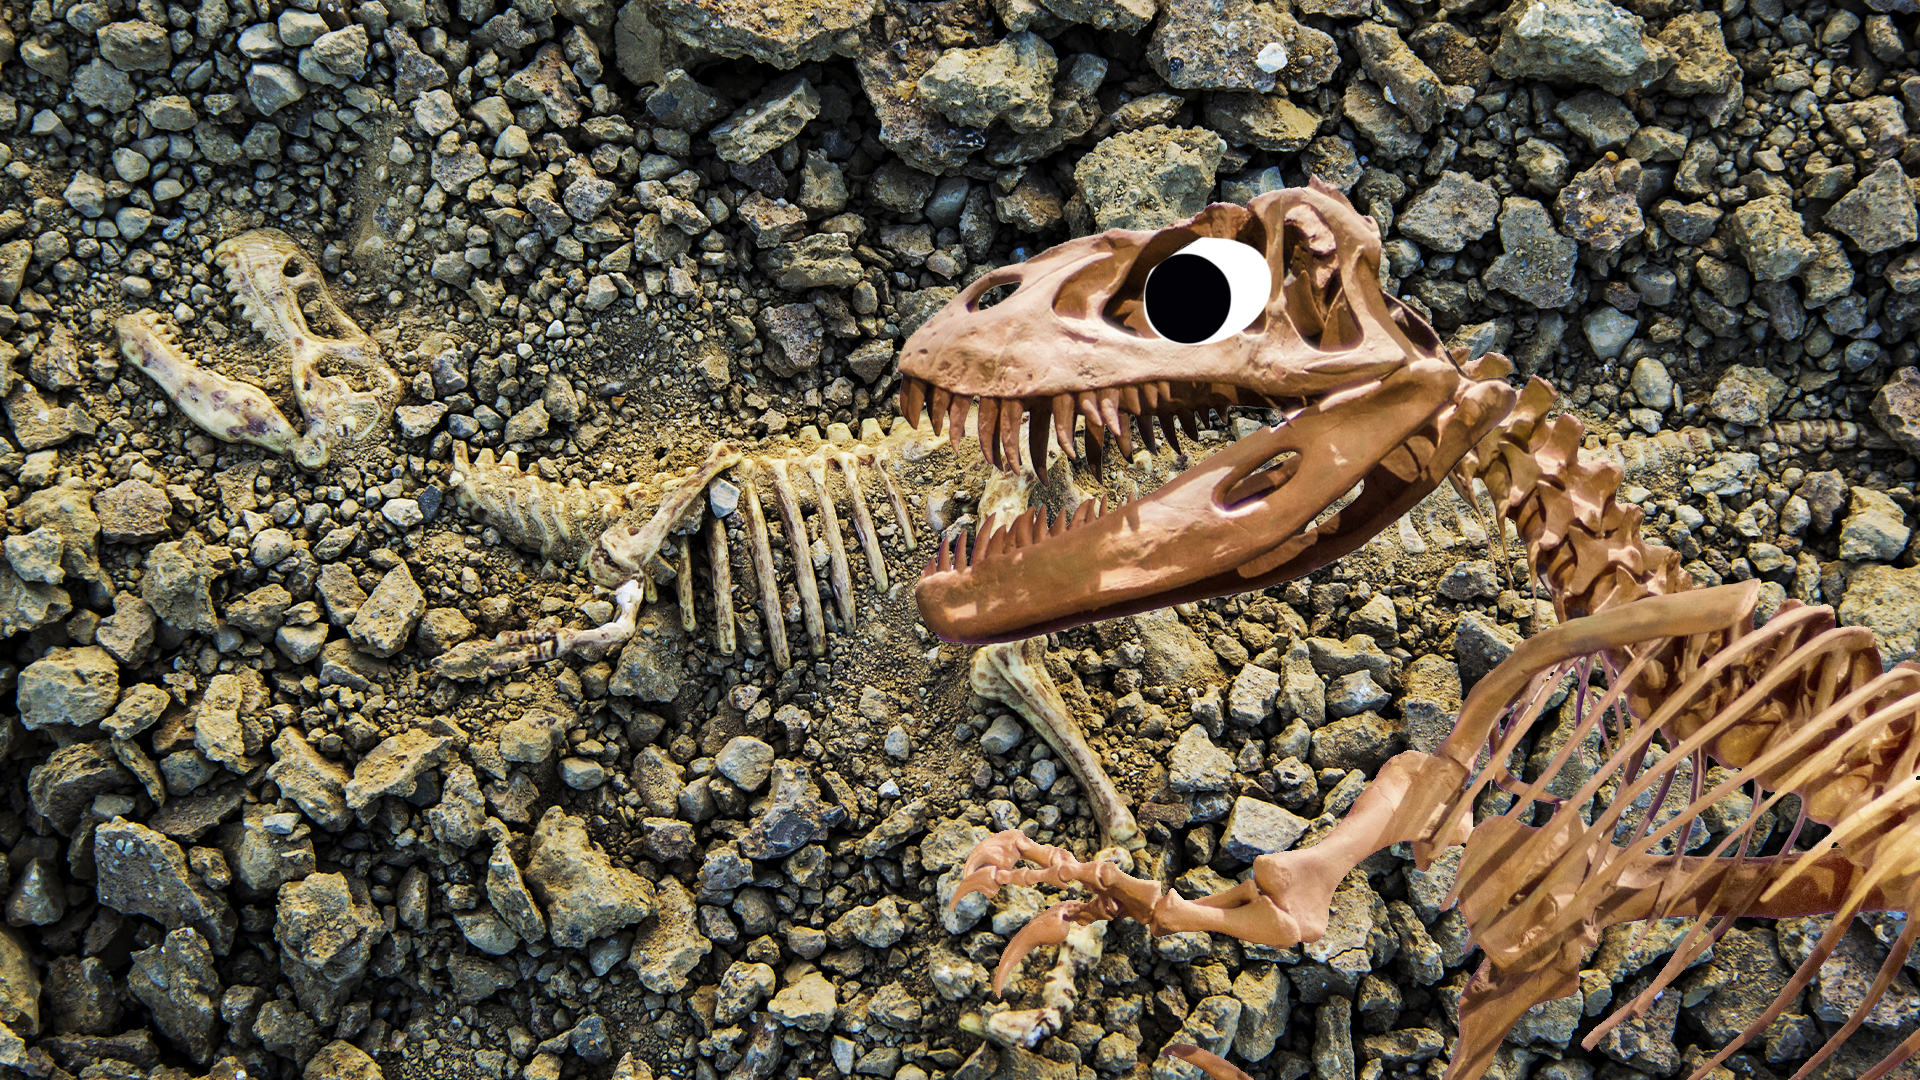 Dinosaur bones in ground with goofy dinosaur skeleton